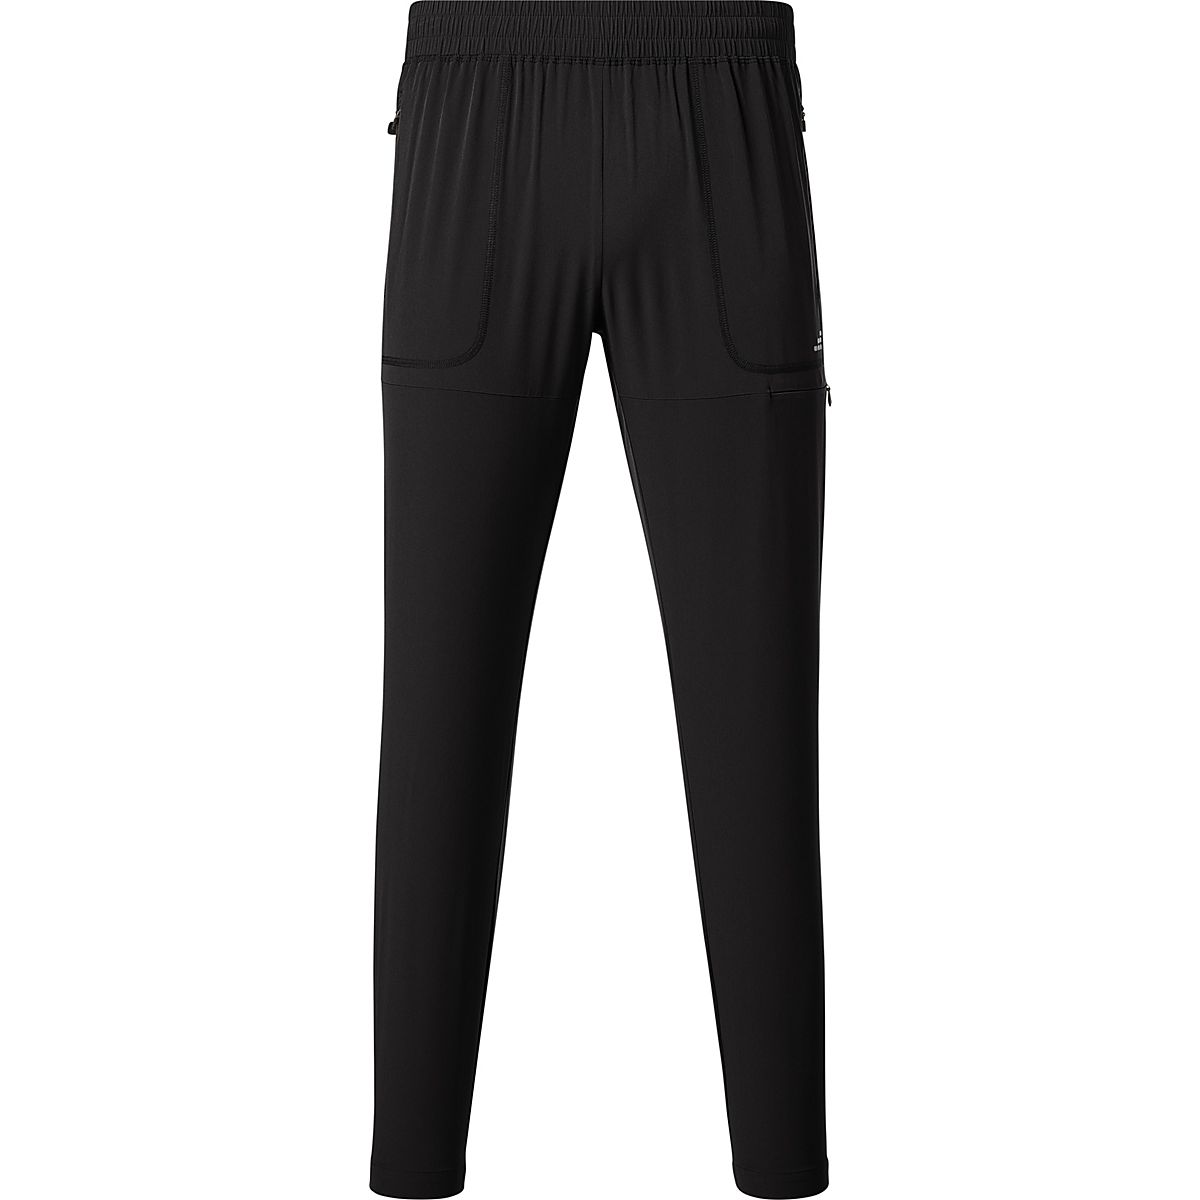 Bcg Solid Black Active Pants Size M - 52% off